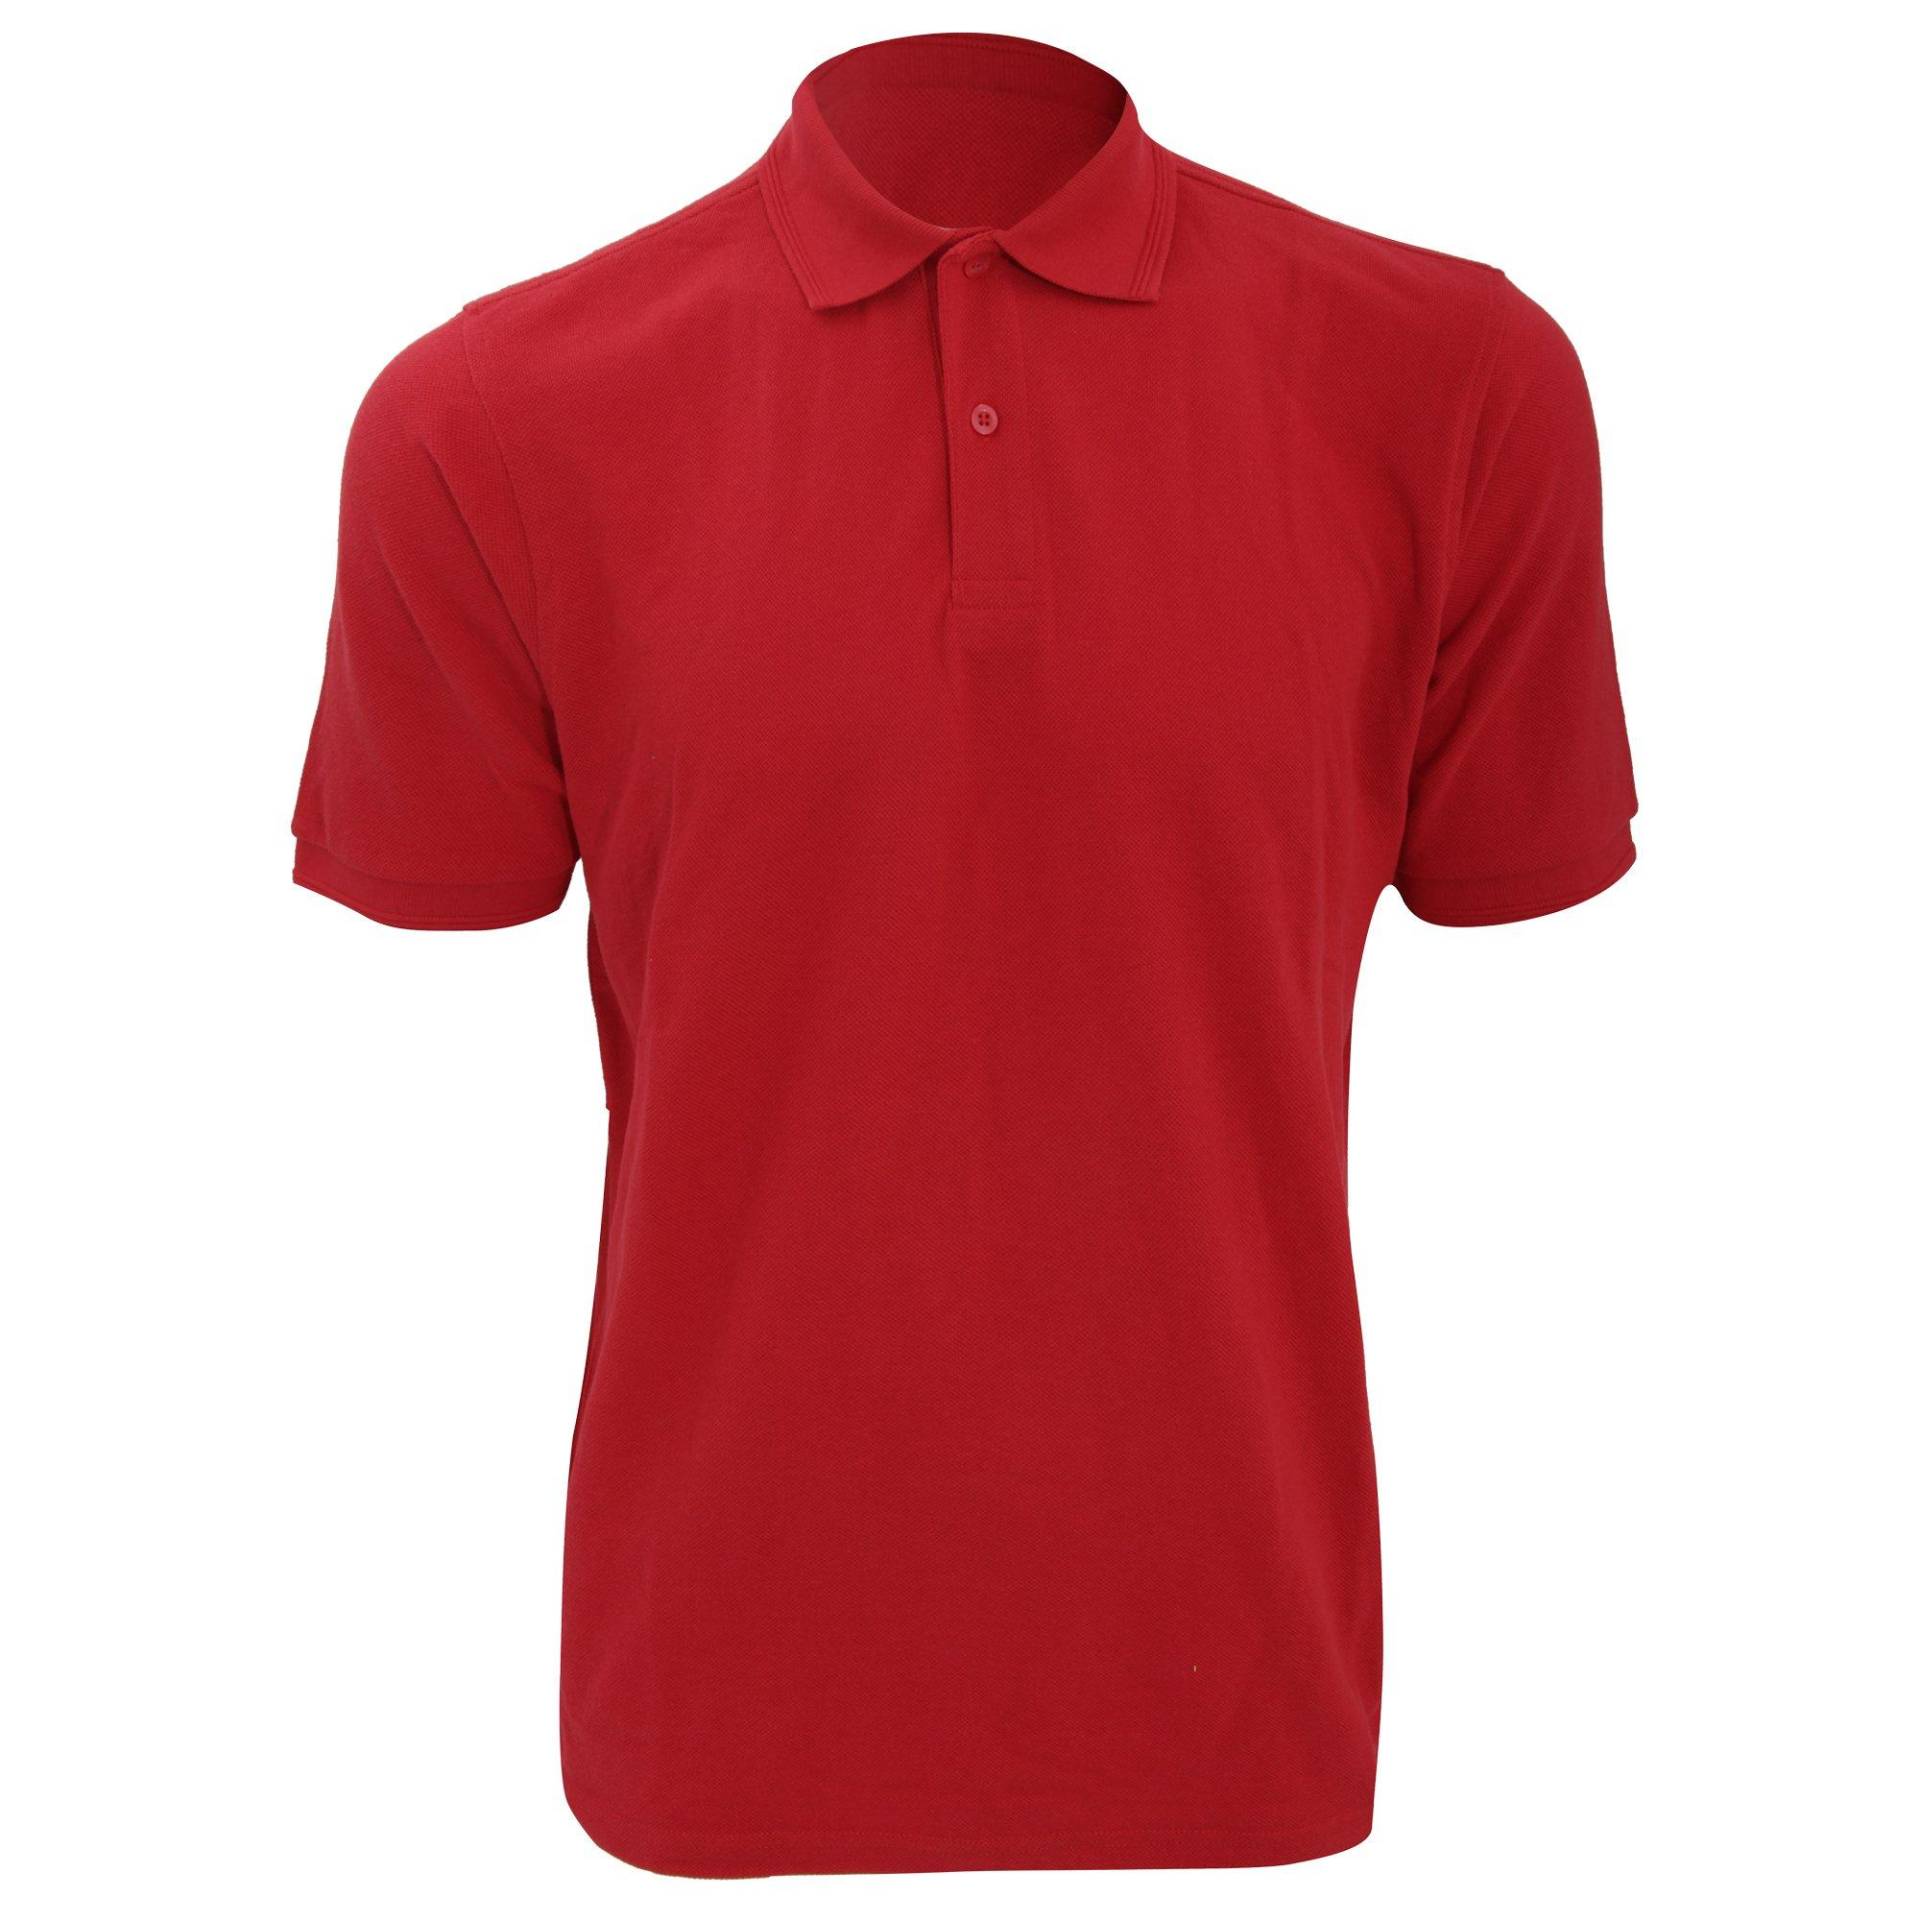 Ripple Collar & Cuff Kurzarm Polo Shirt Herren Rot Bunt XXL von Russell